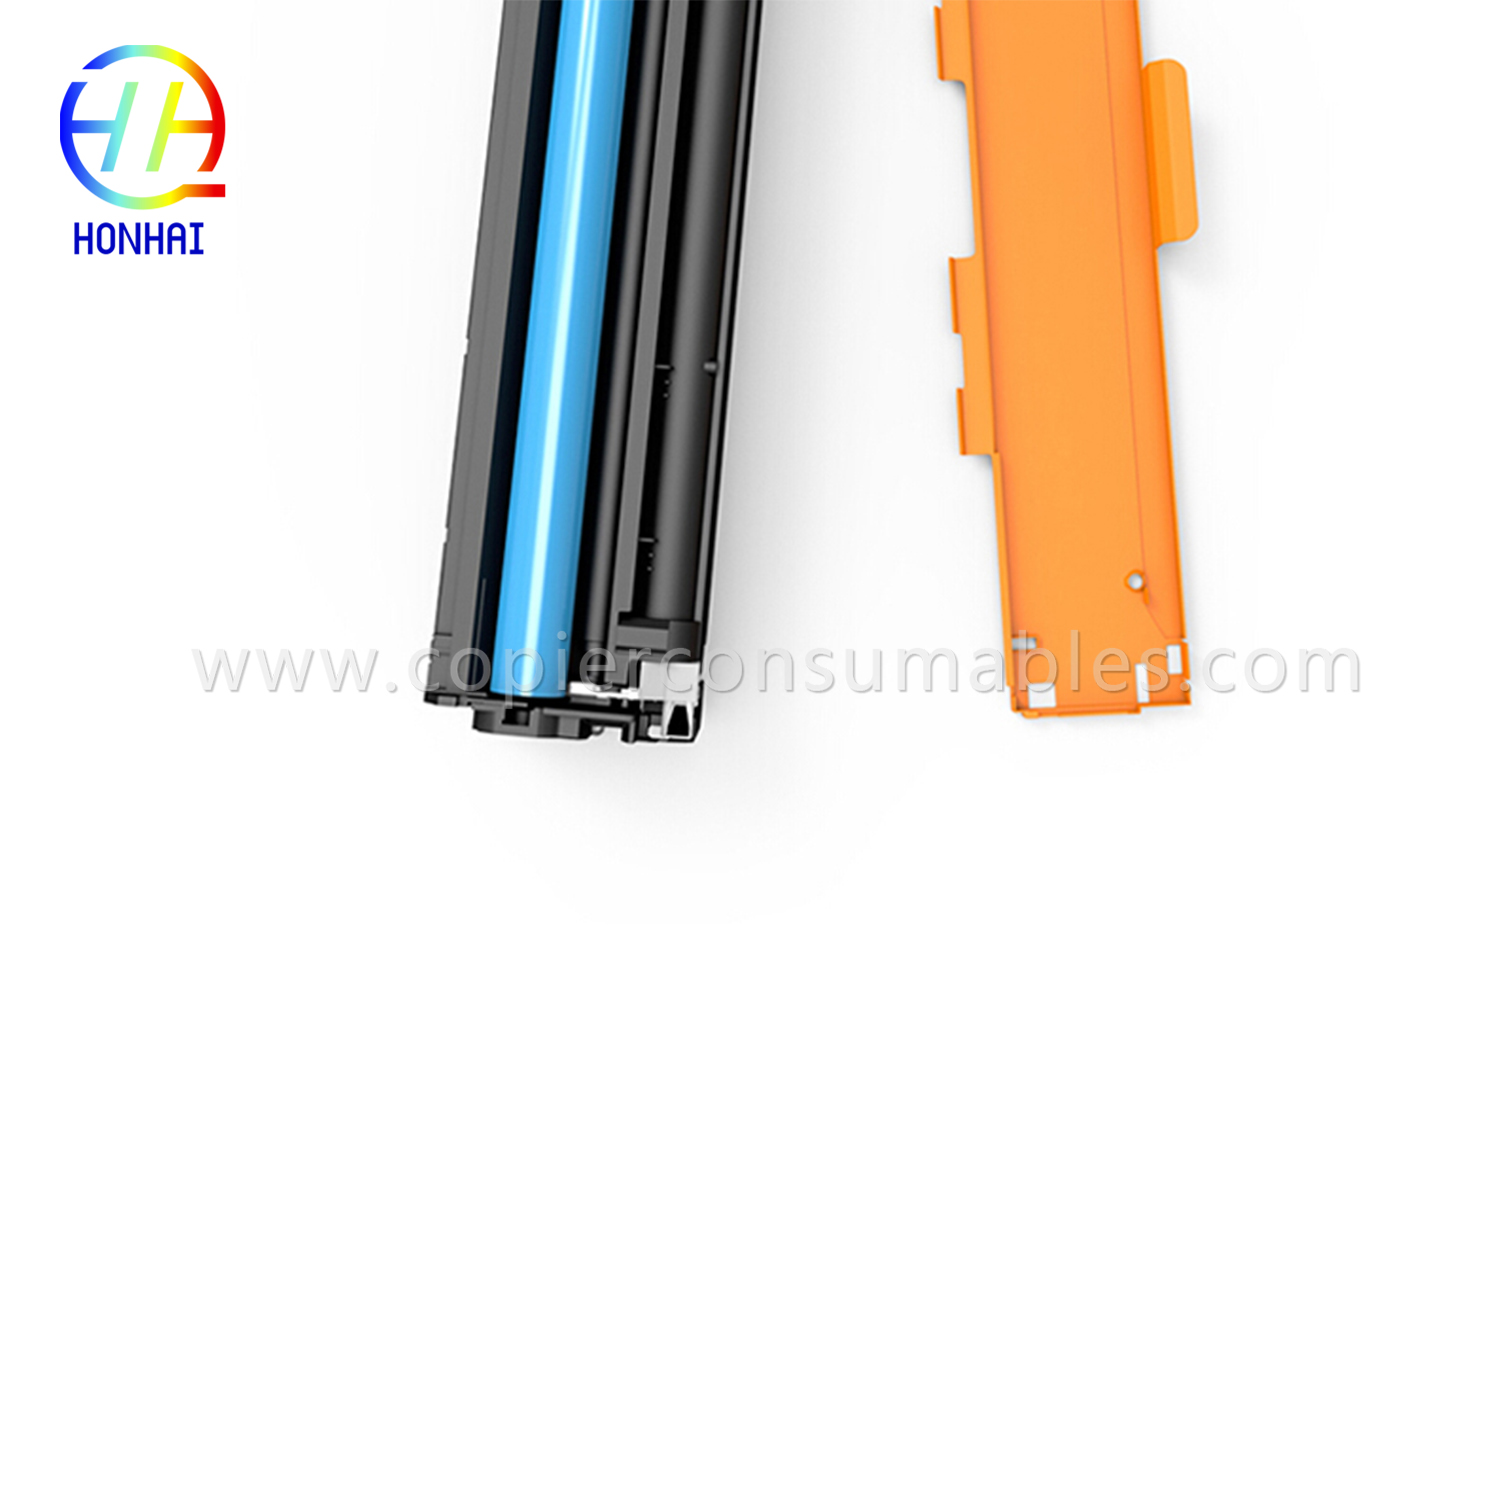 HP Laserjet PRO 200 Color M251nw Mfp M276nw (CF212A CF213A) के लिए टोनर कार्ट्रिज